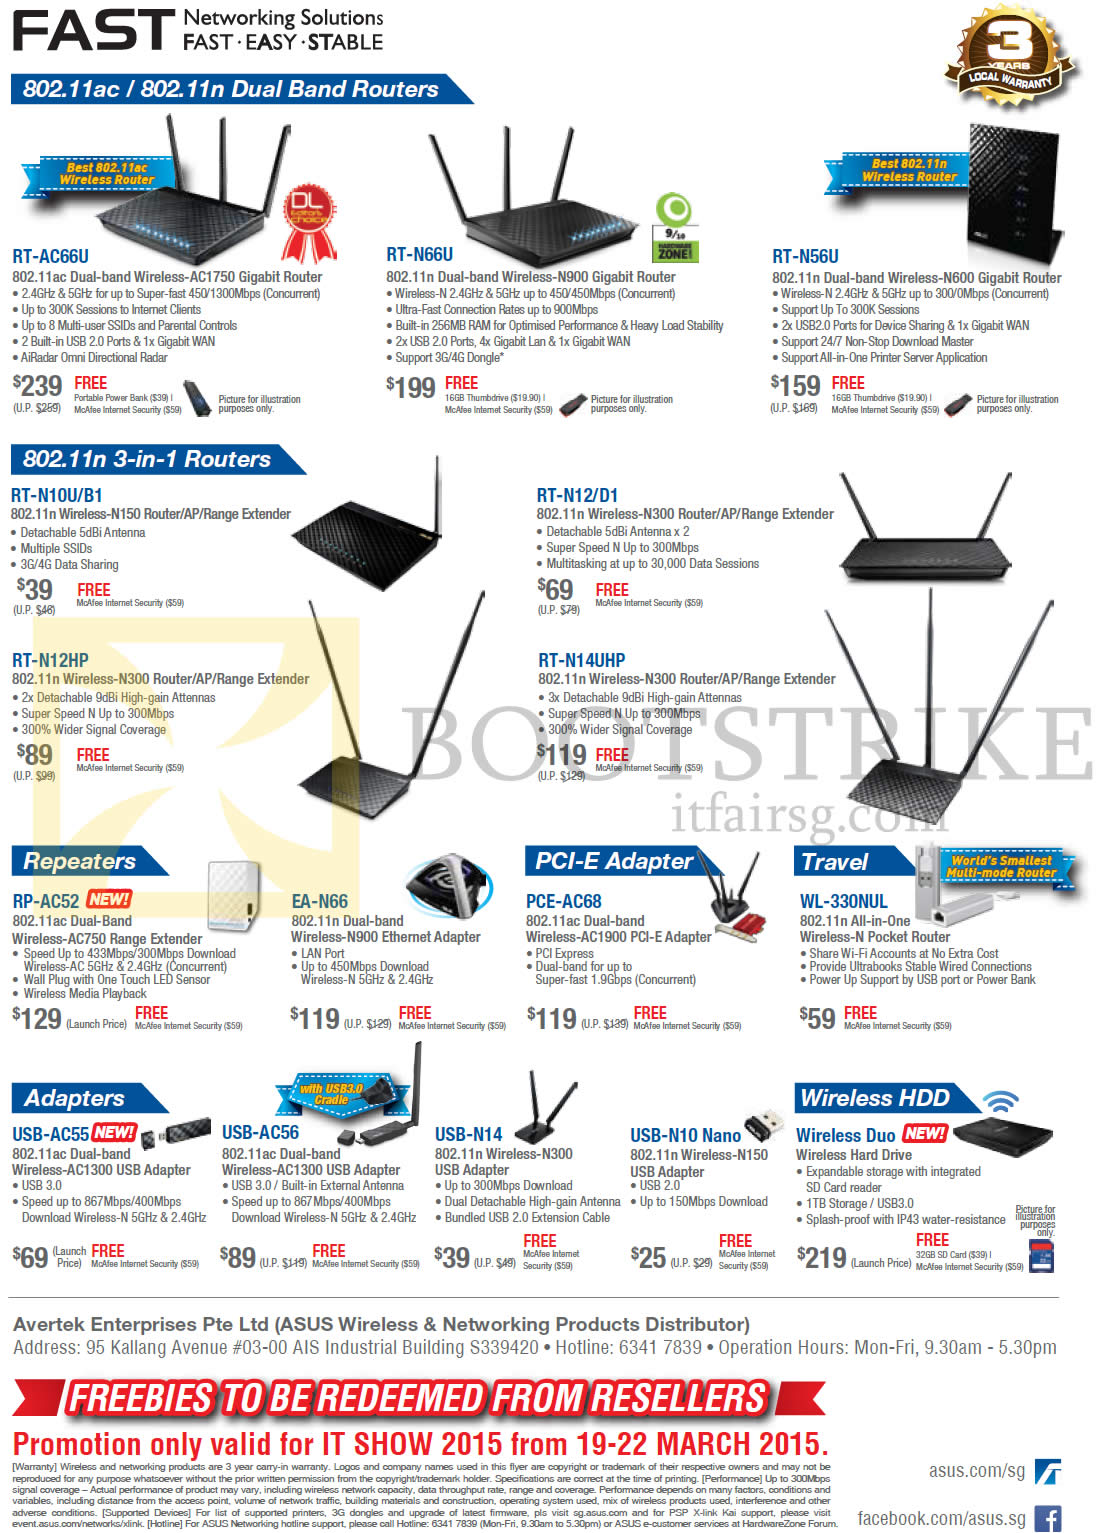 IT SHOW 2015 price list image brochure of ASUS Networking Routers, Repeaters, Adapters, RT-AC66U, RT-N66U, RT-N56U, RT-N12HP, RT-N14UHP, RP-AC52, EA-N66. PCE-AC68, WL-330NUL, USB-AC55, USB-AC56, USB-N14, USB-N10